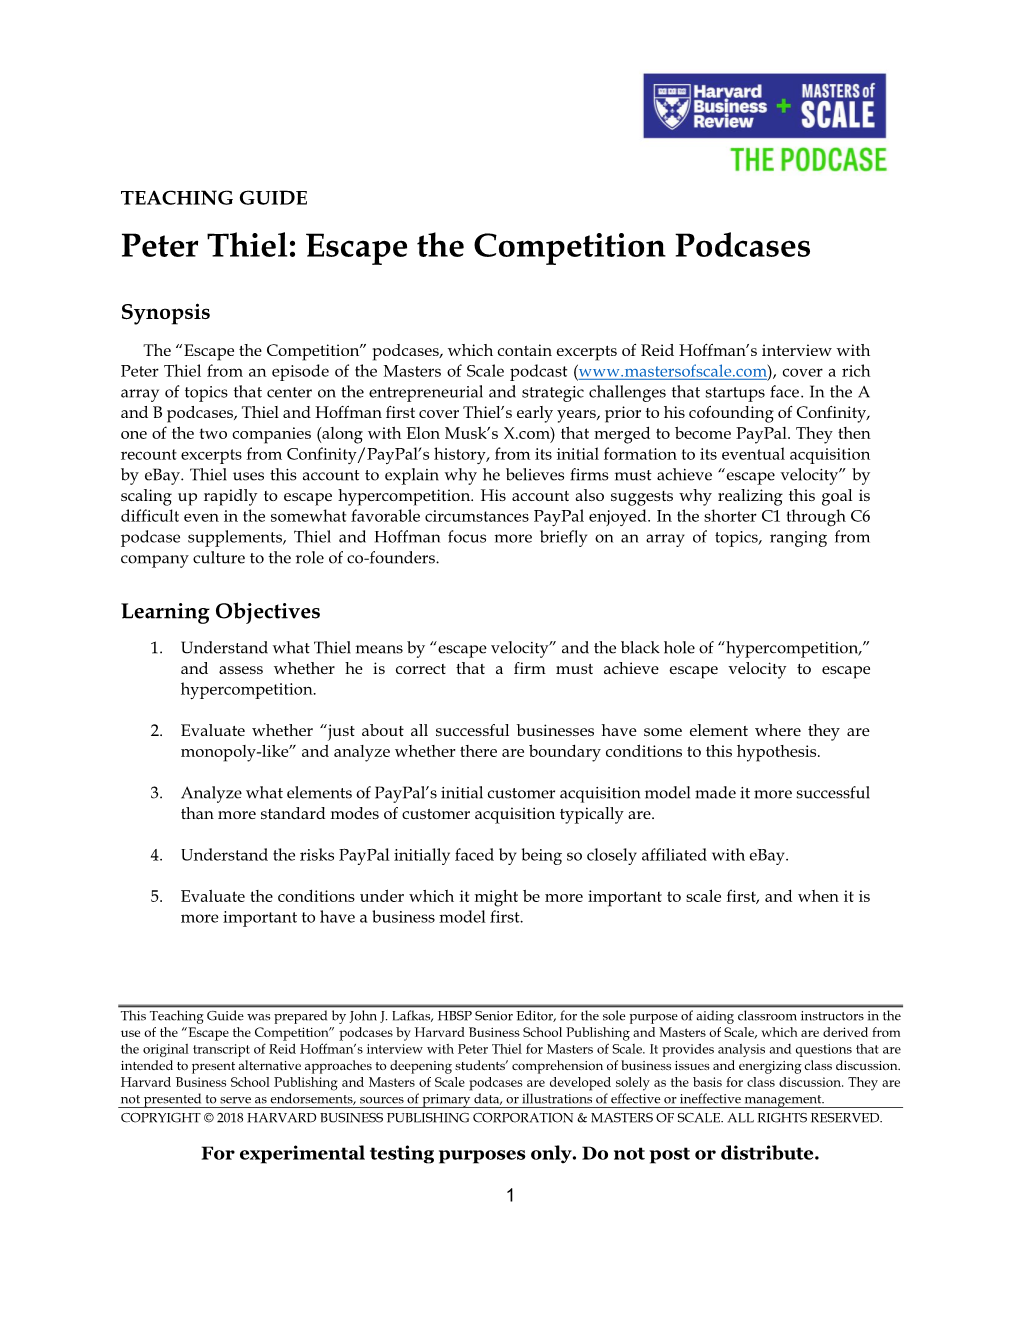 Peter Thiel: Escape the Competition Podcases